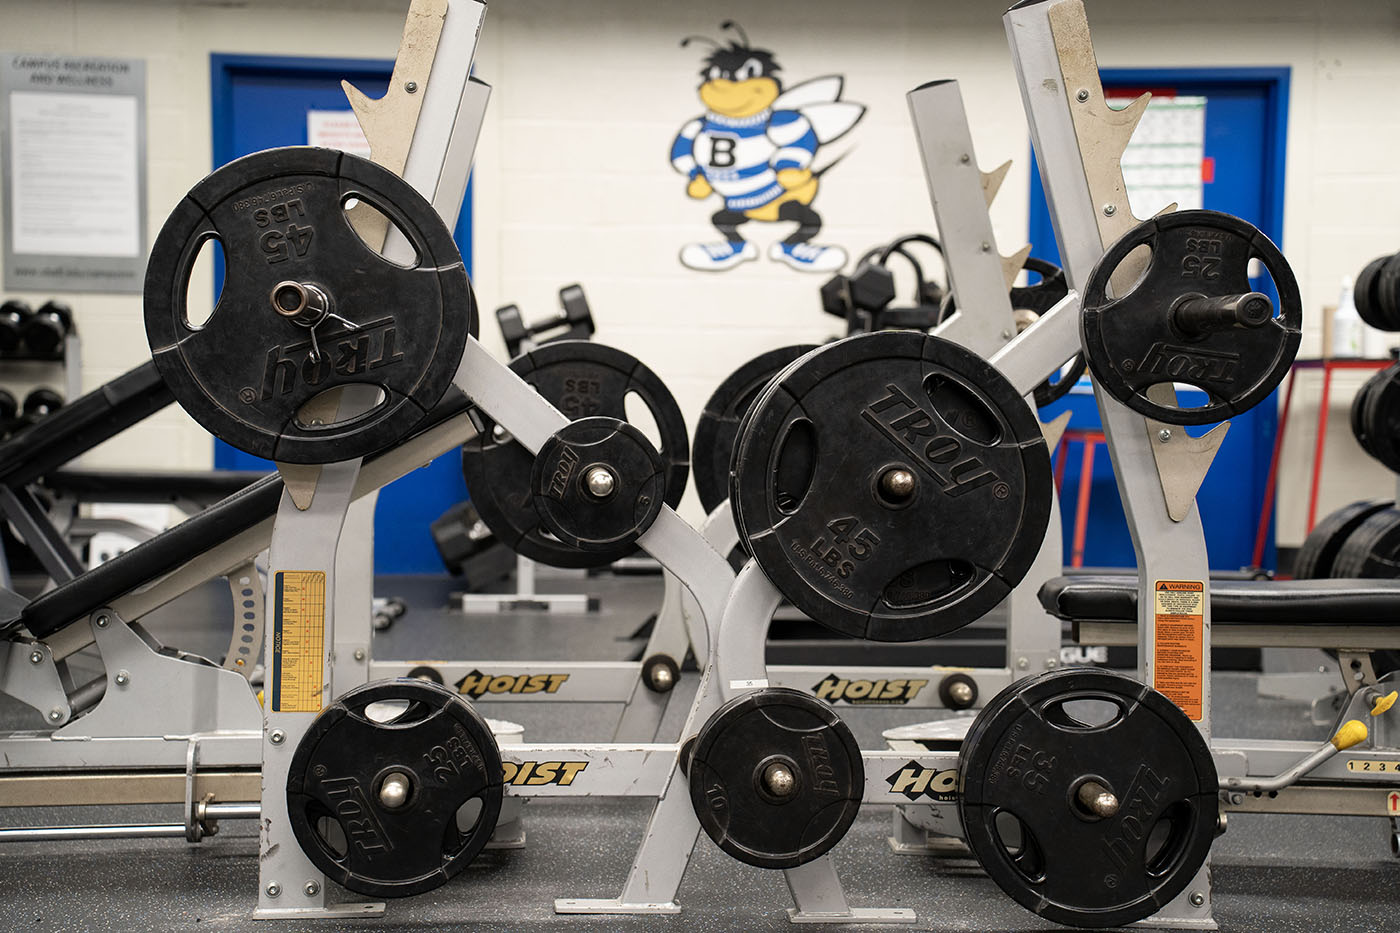 weight machines in the UBalt gym